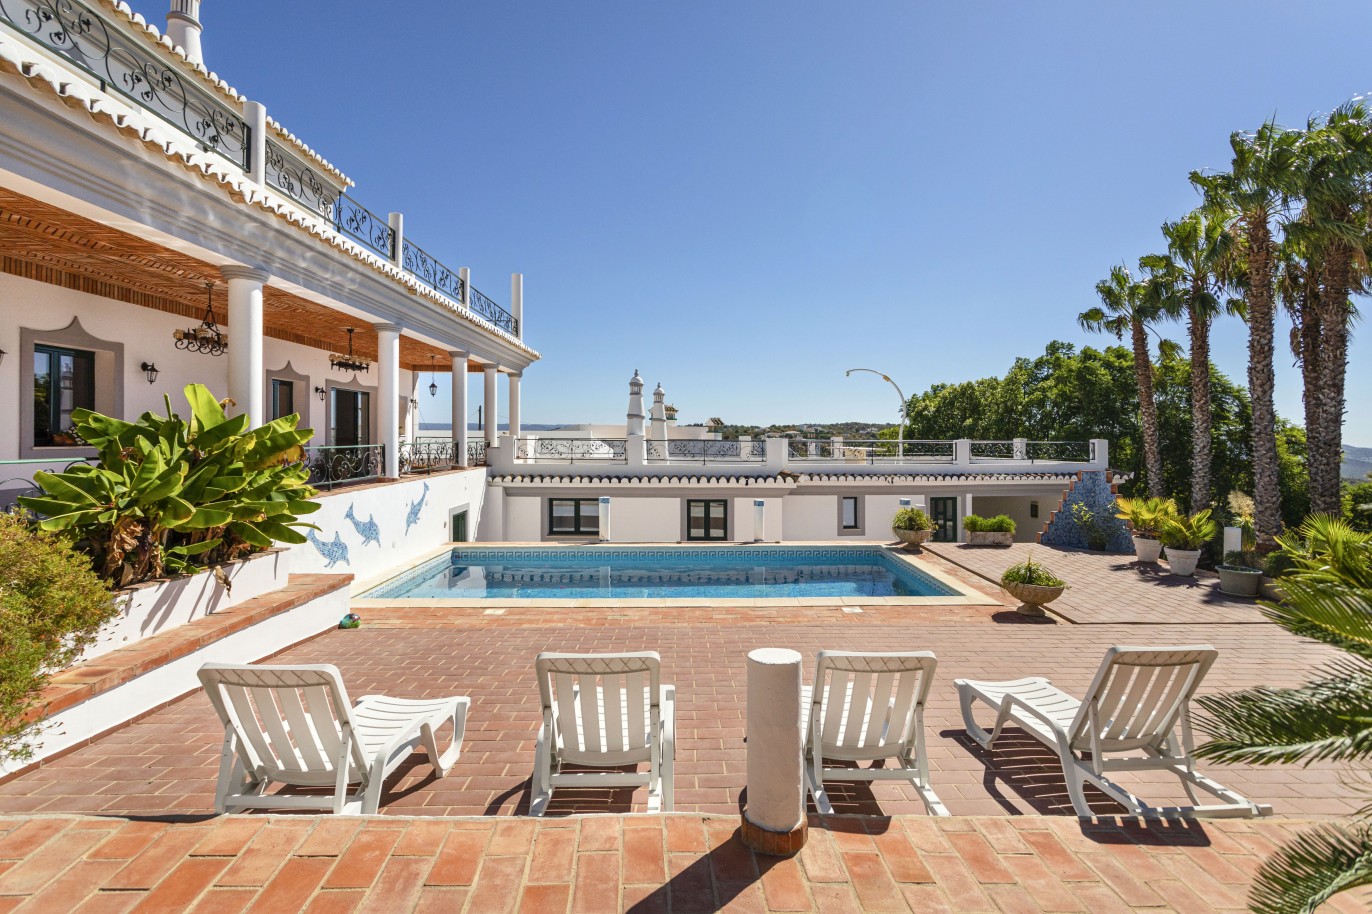 Villa zum Verkauf mit pool, Meer-und Bergblick, Loulé, Algarve, Portugal_236415